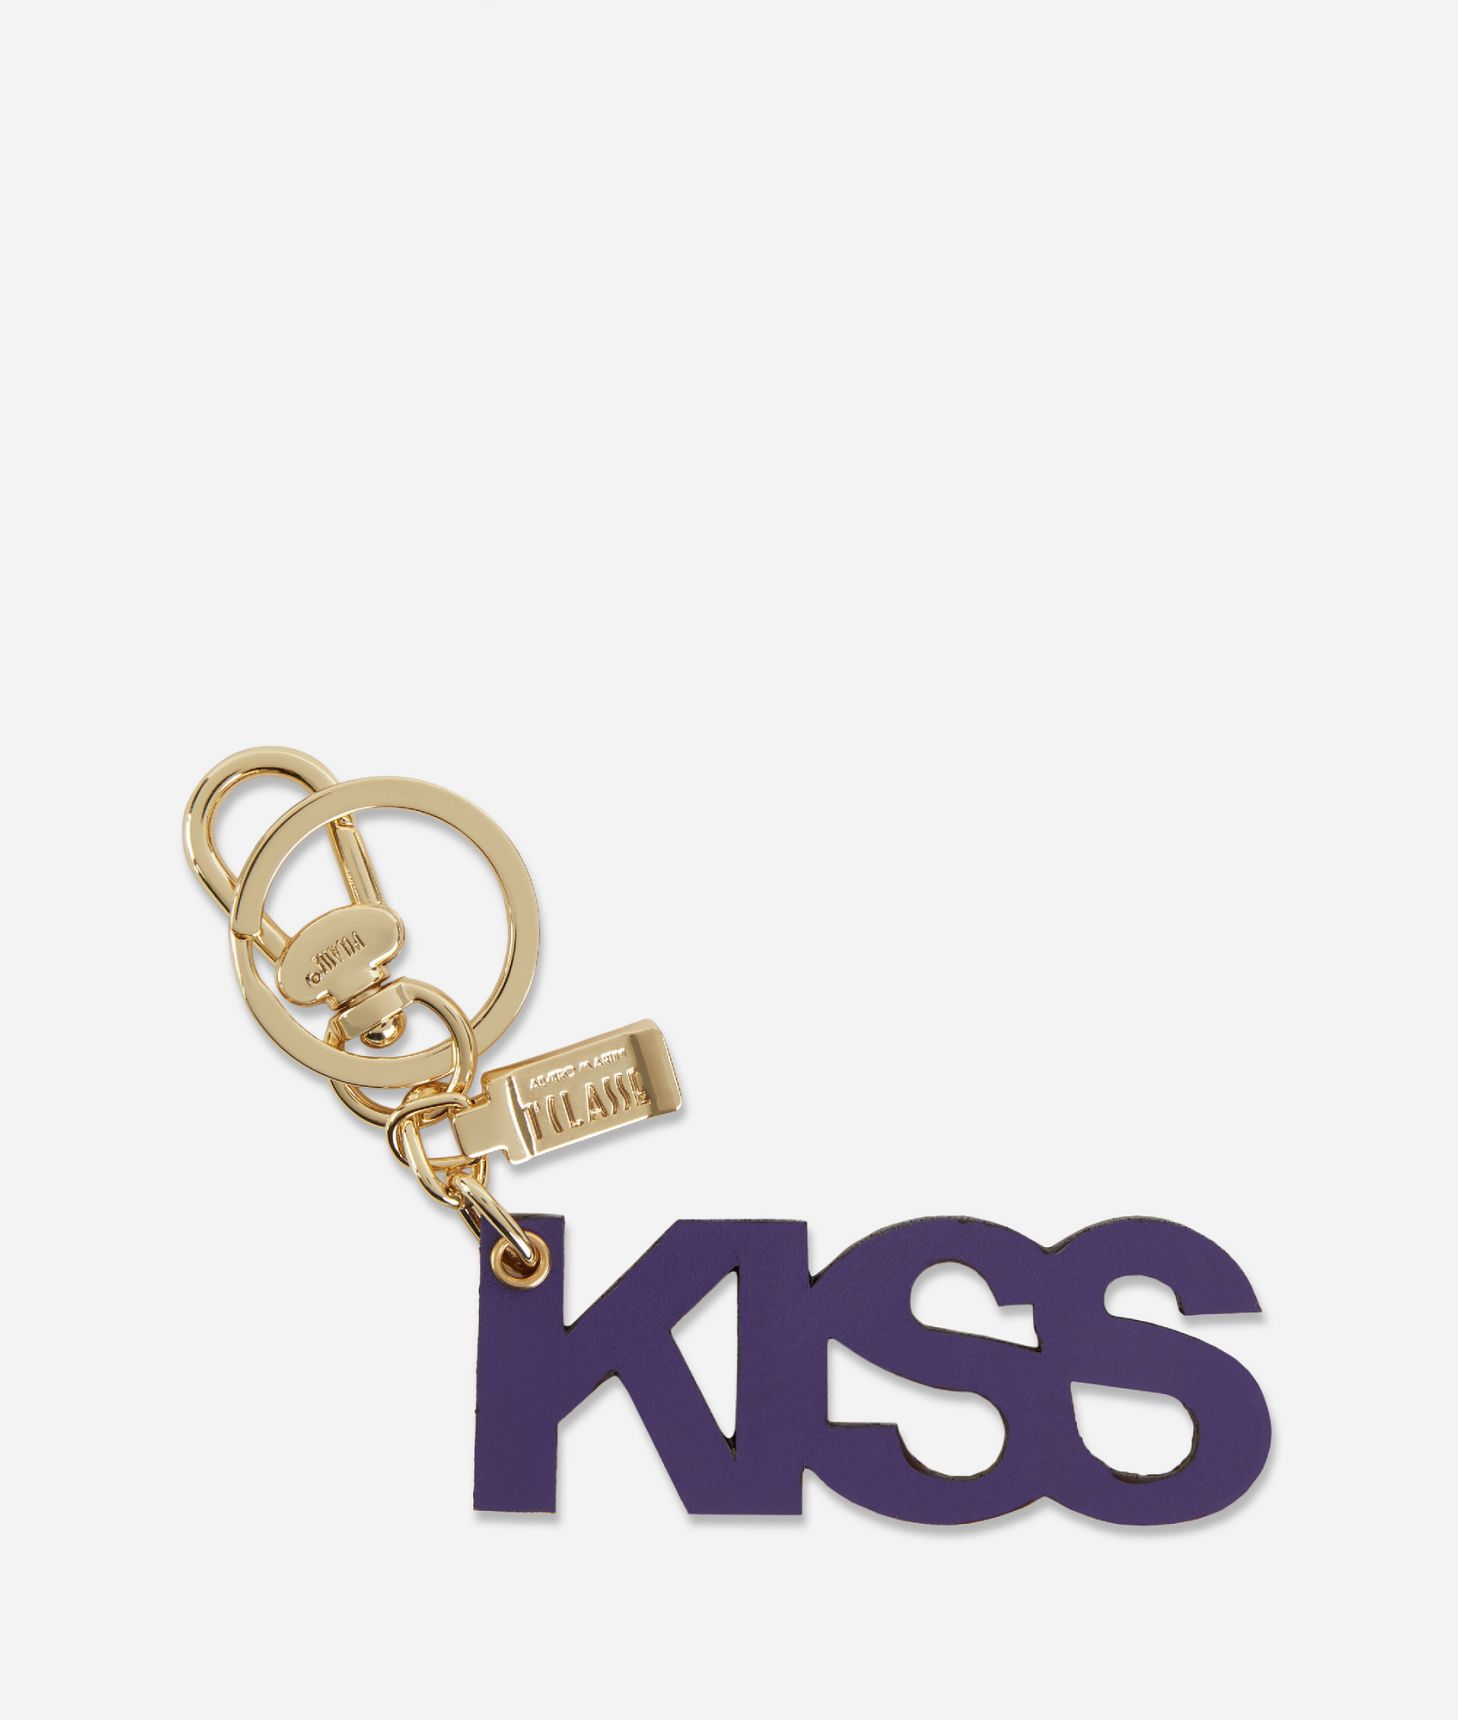 Kiss leather keychain Indigo,front